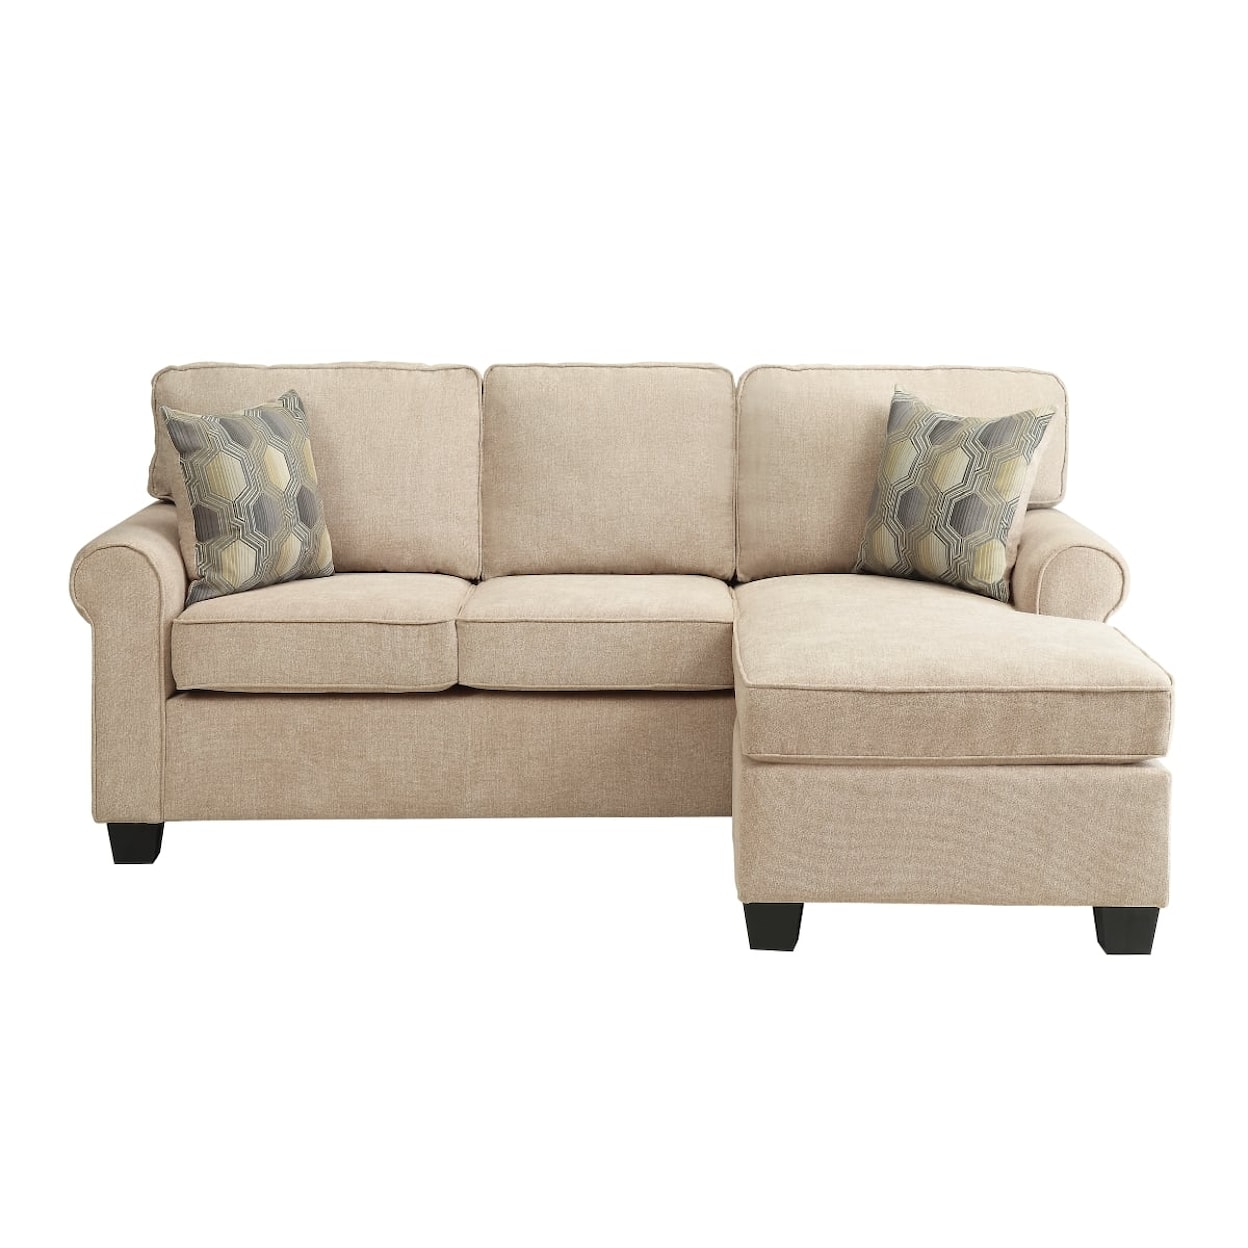 Homelegance Clumber Reversible Sofa Chaise